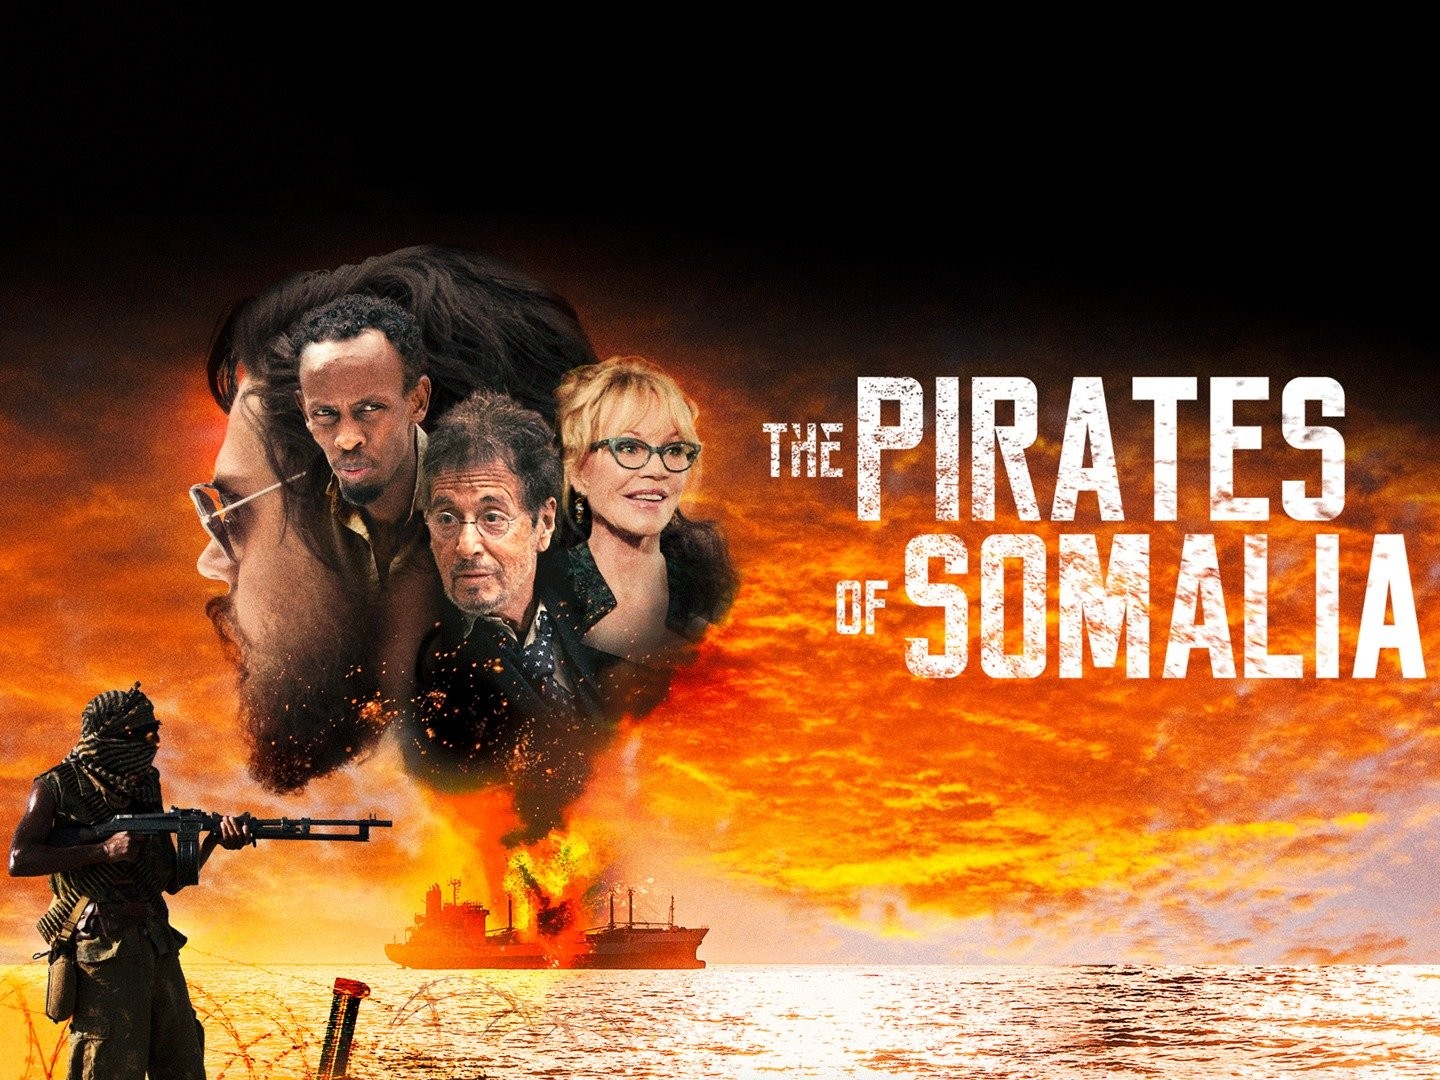 The Pirates of Somalia (Filme), Trailer, Sinopse e Curiosidades - Cinema10